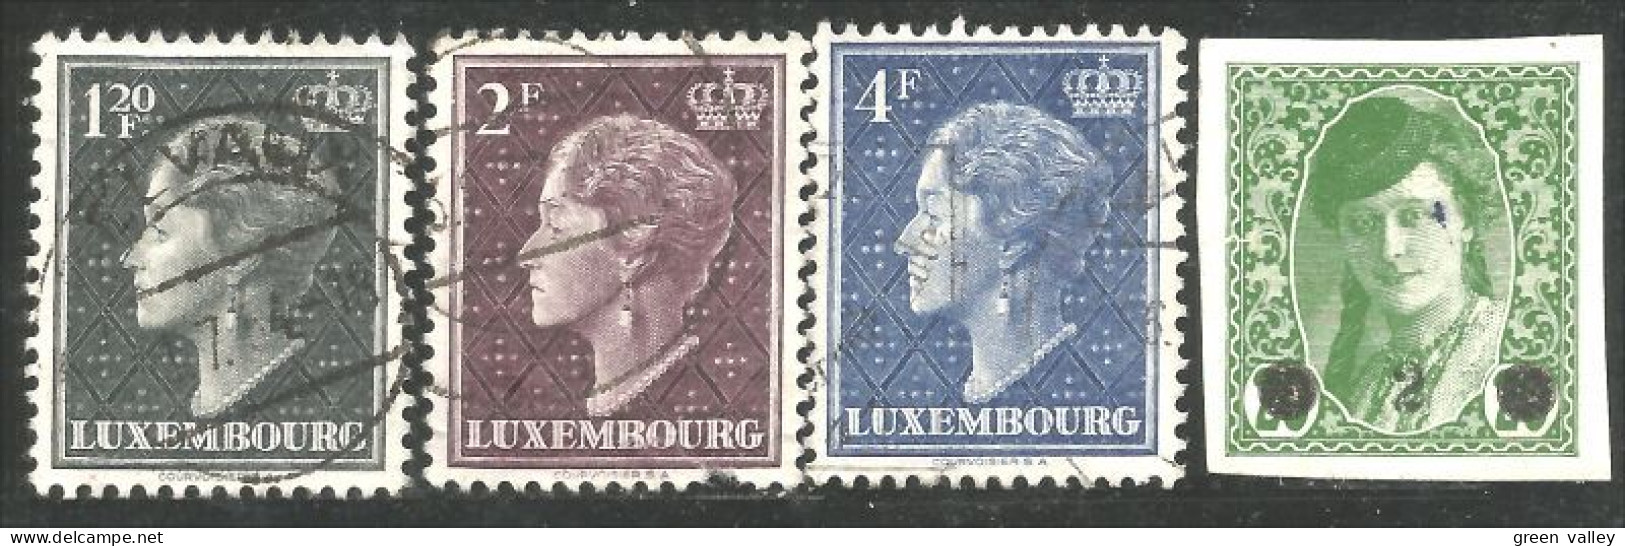 584 Luxembourg 1948 Grande Duchesse Charlotte 1F 20 - 4F (LUX-123) - 1948-58 Charlotte De Profil à Gauche